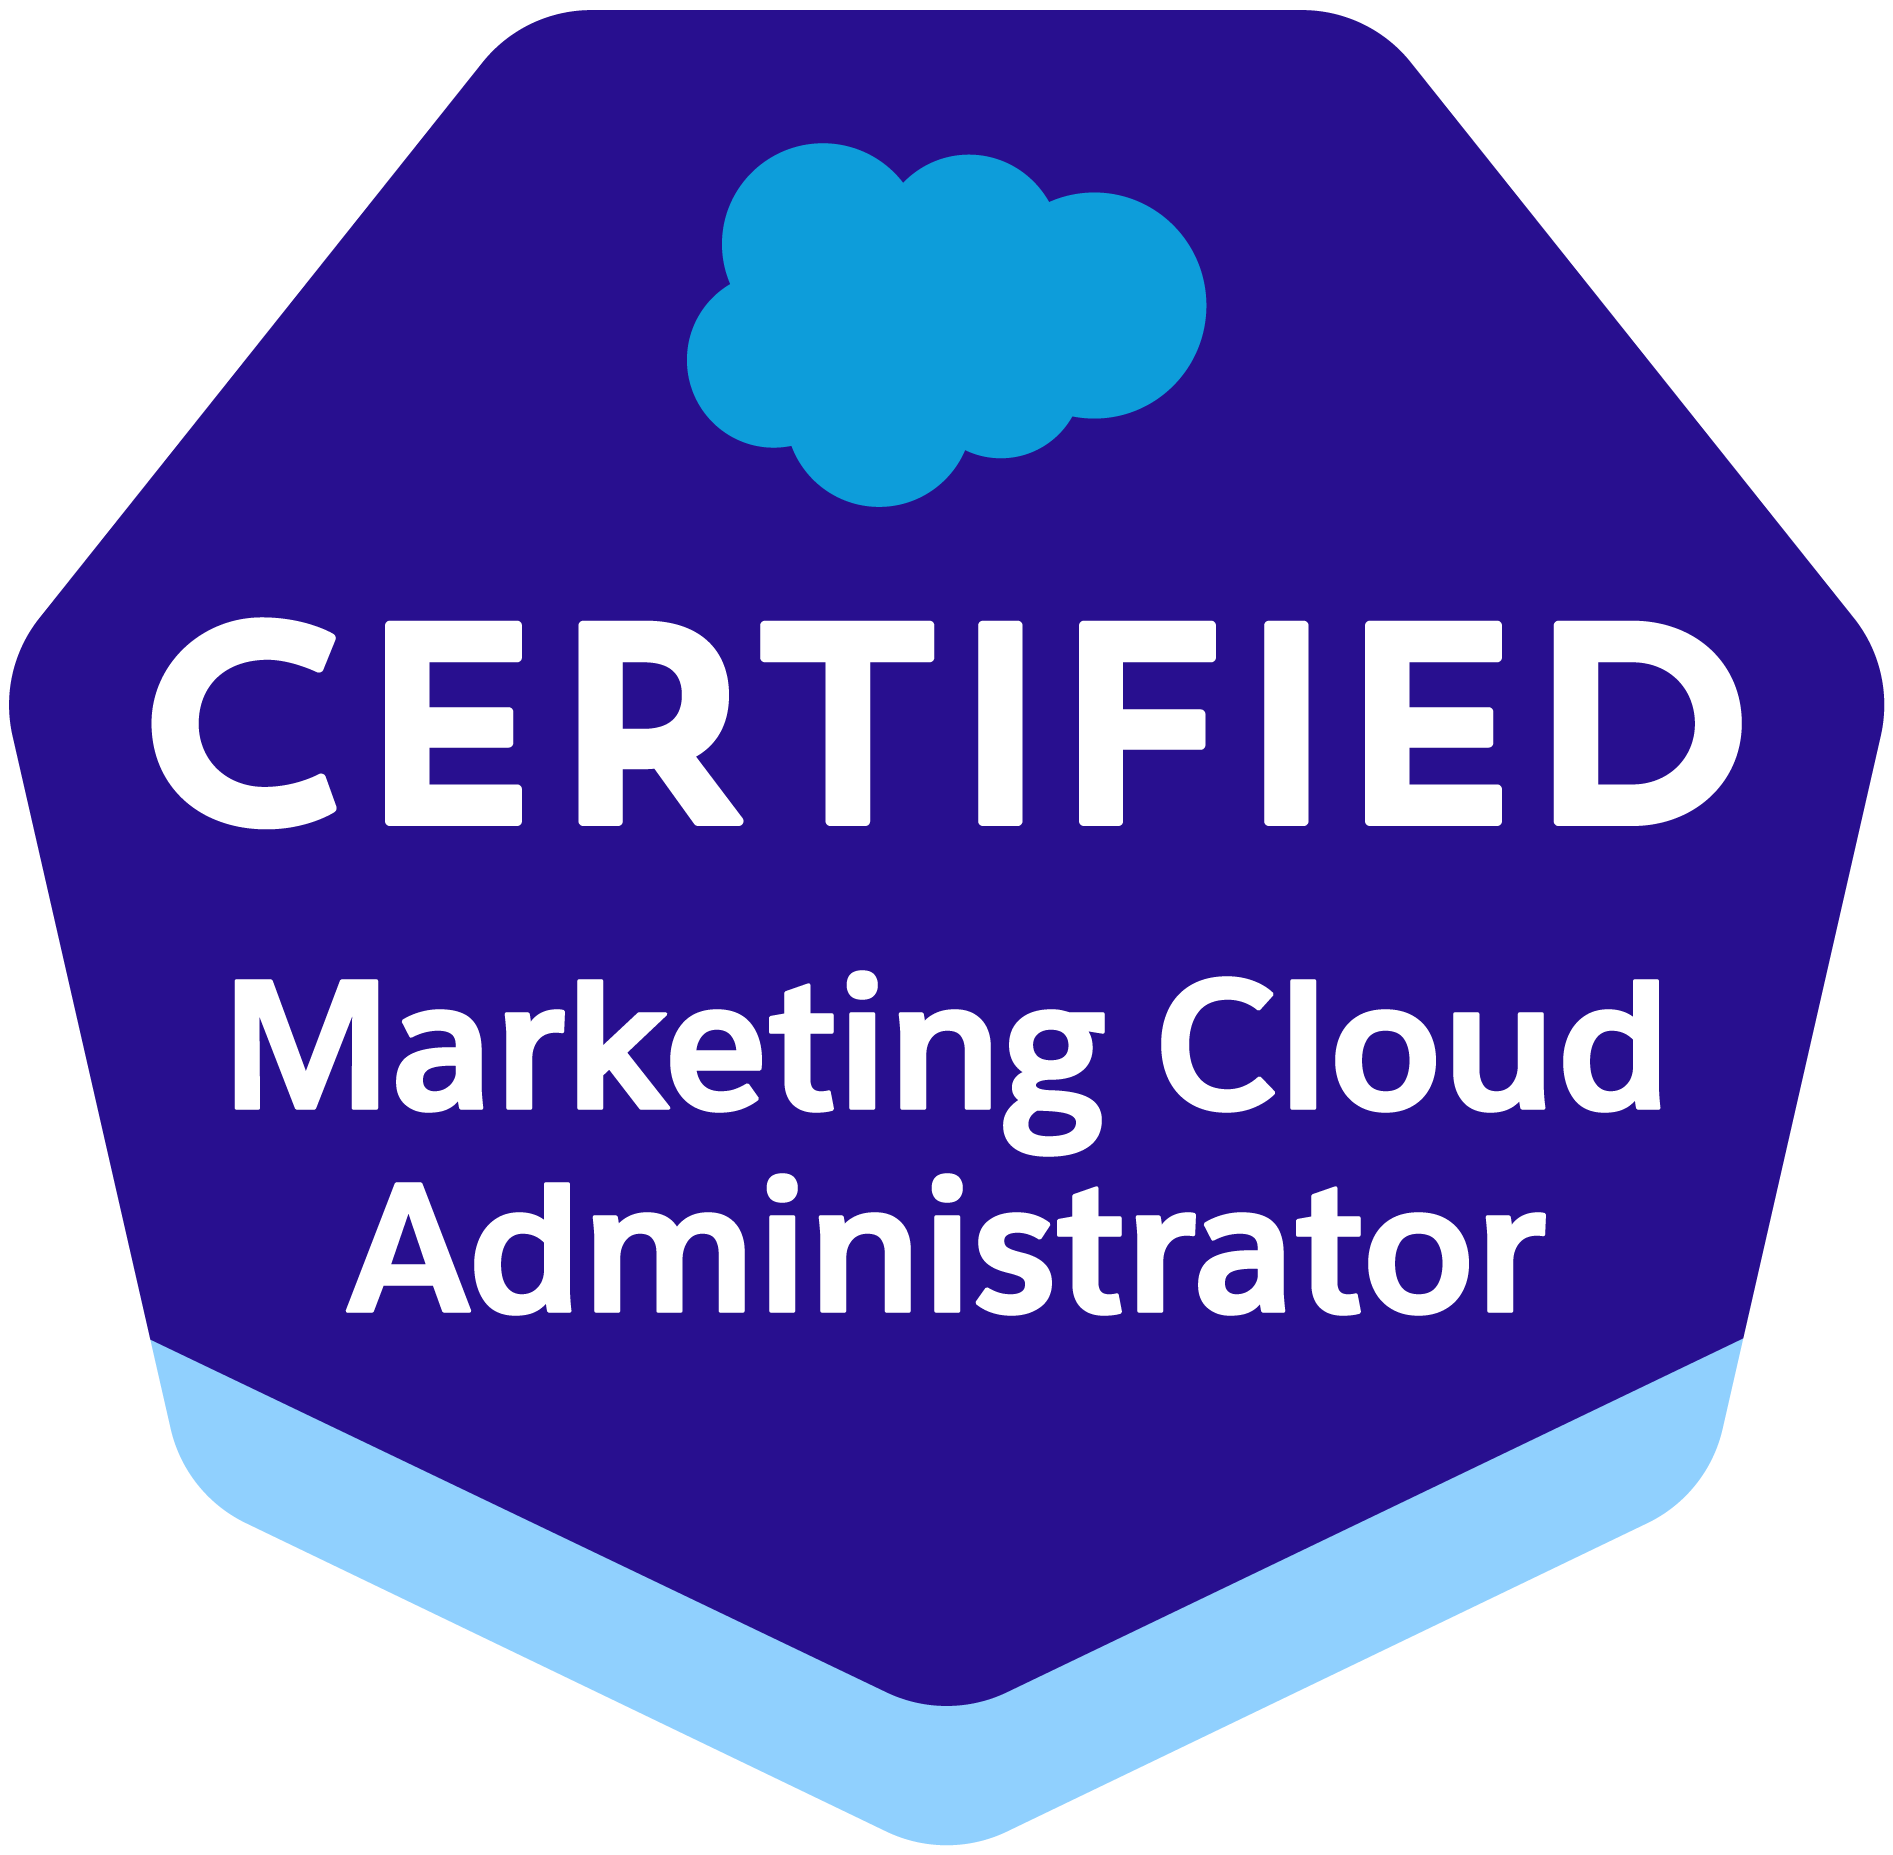 Marketing Cloud Administrator certification